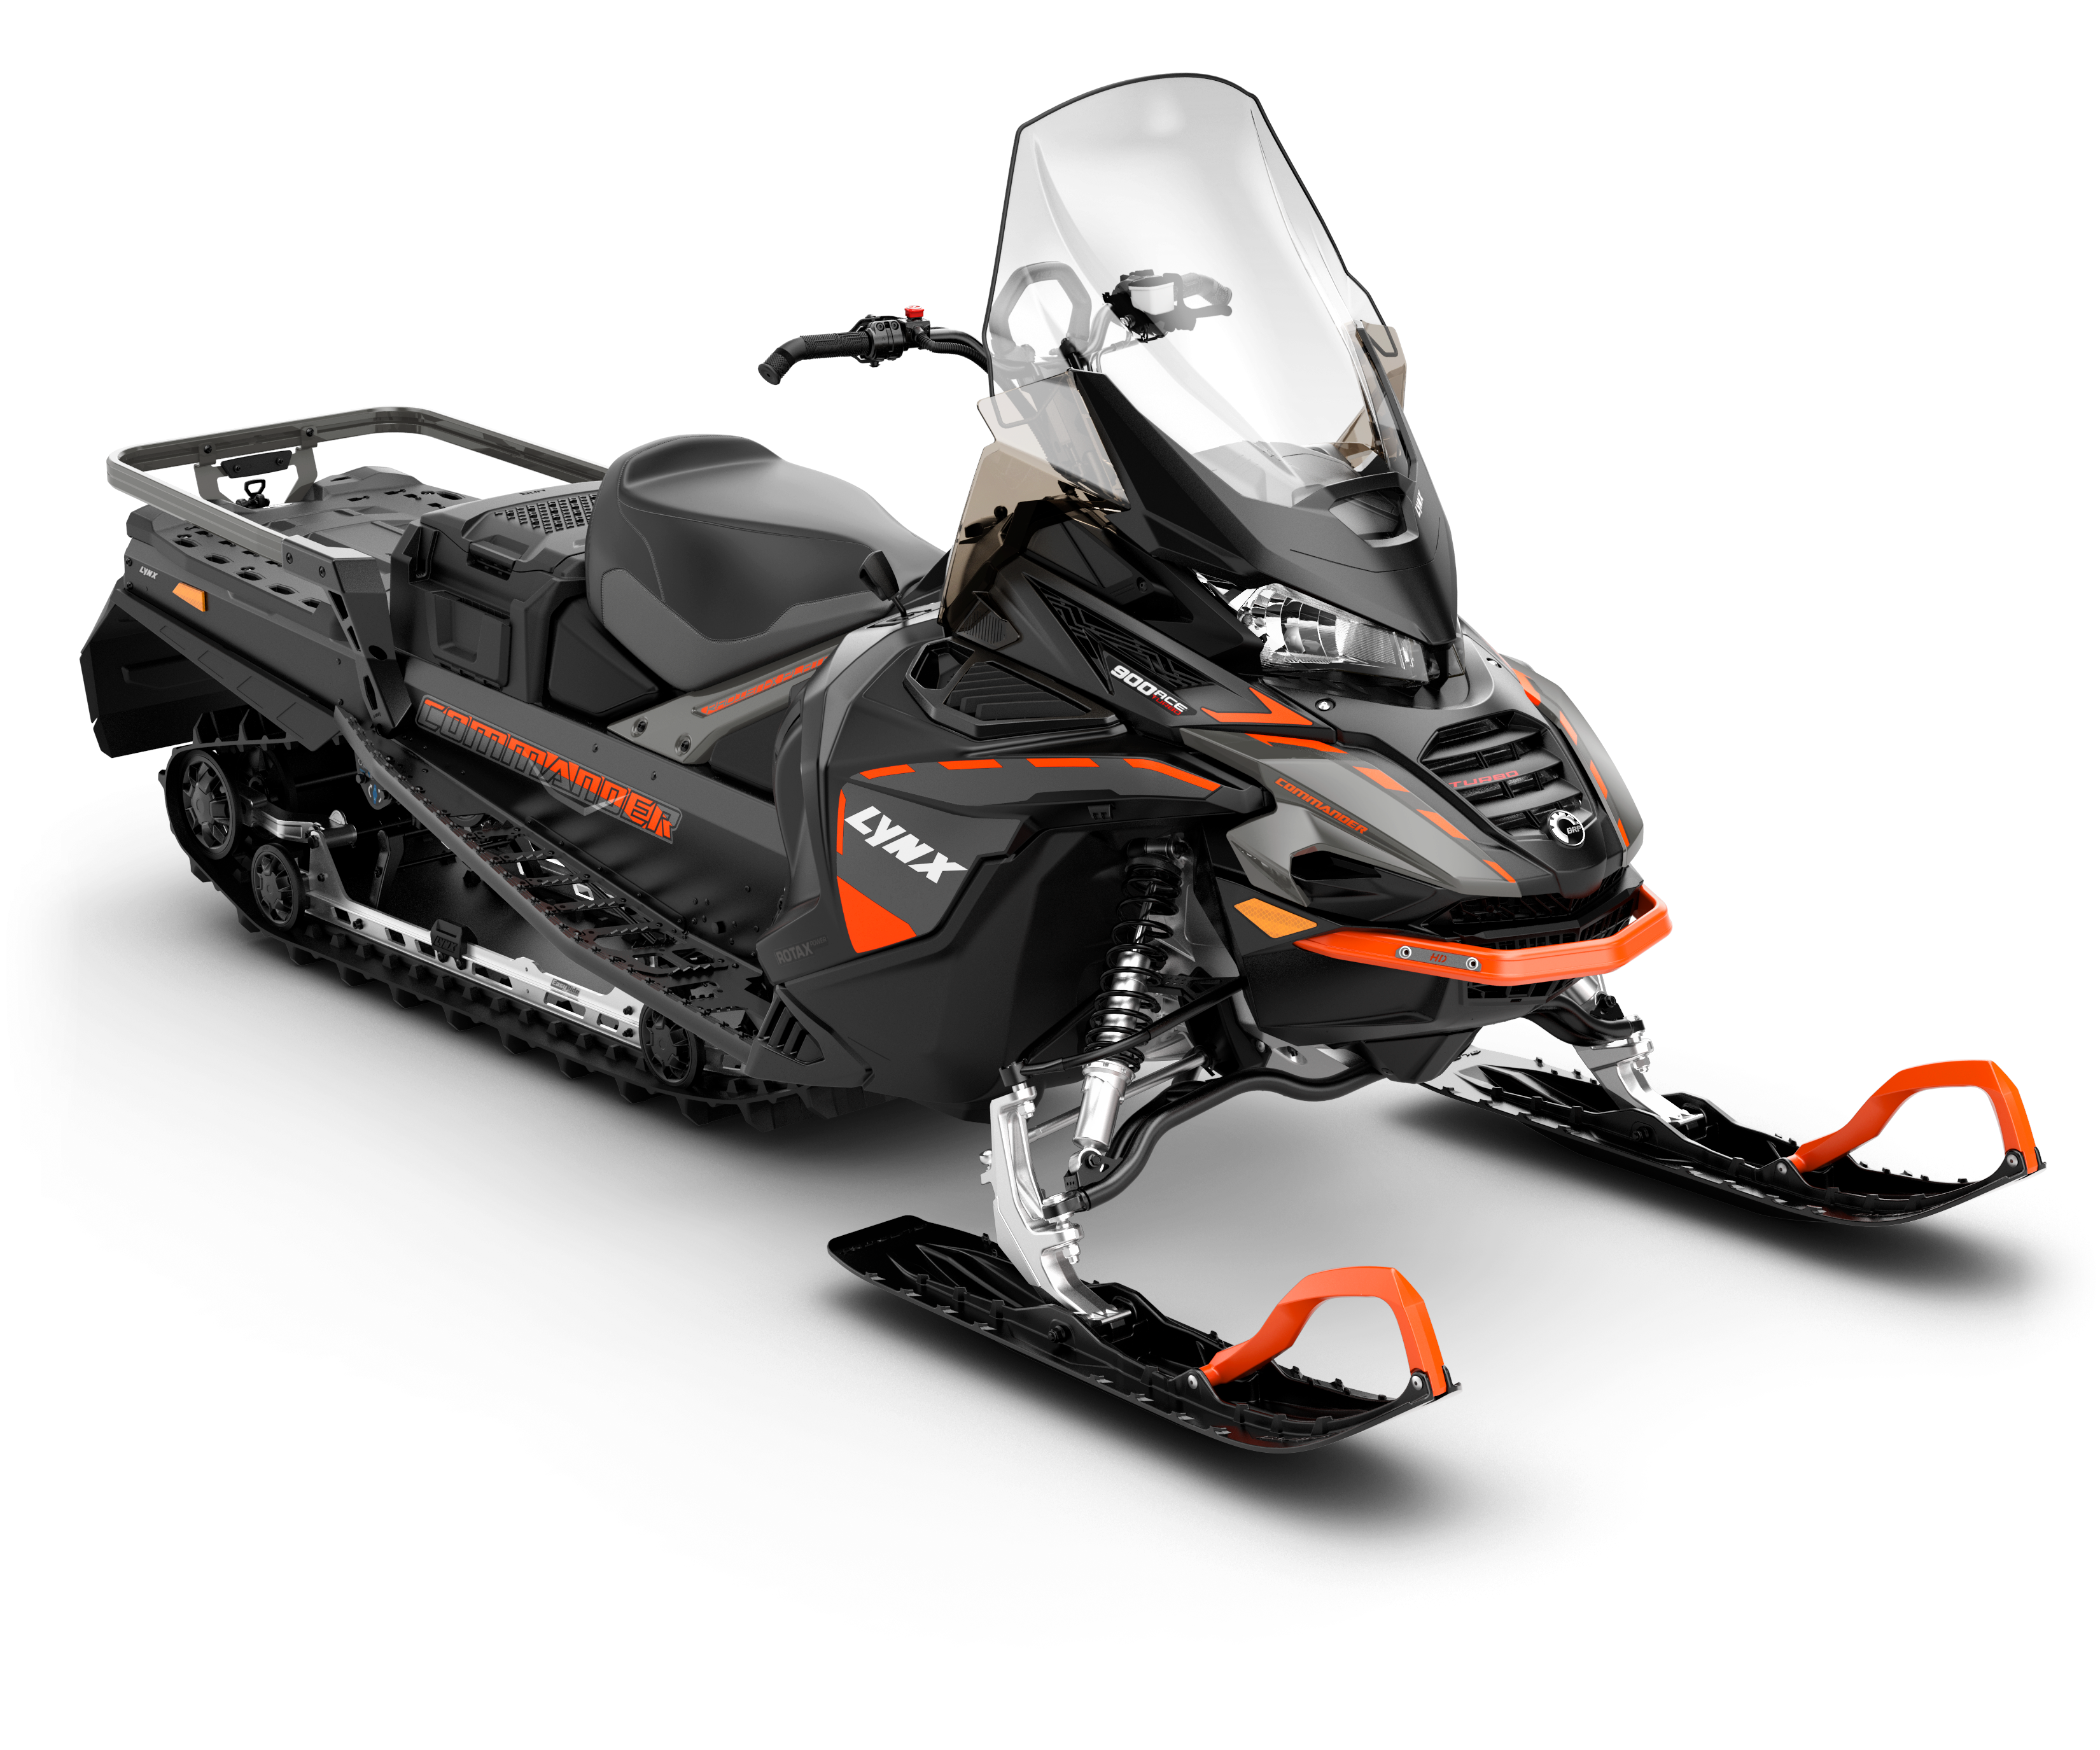 2021 Lynx Commander snowmobile for sale - Crossover snowmobile - Lynx